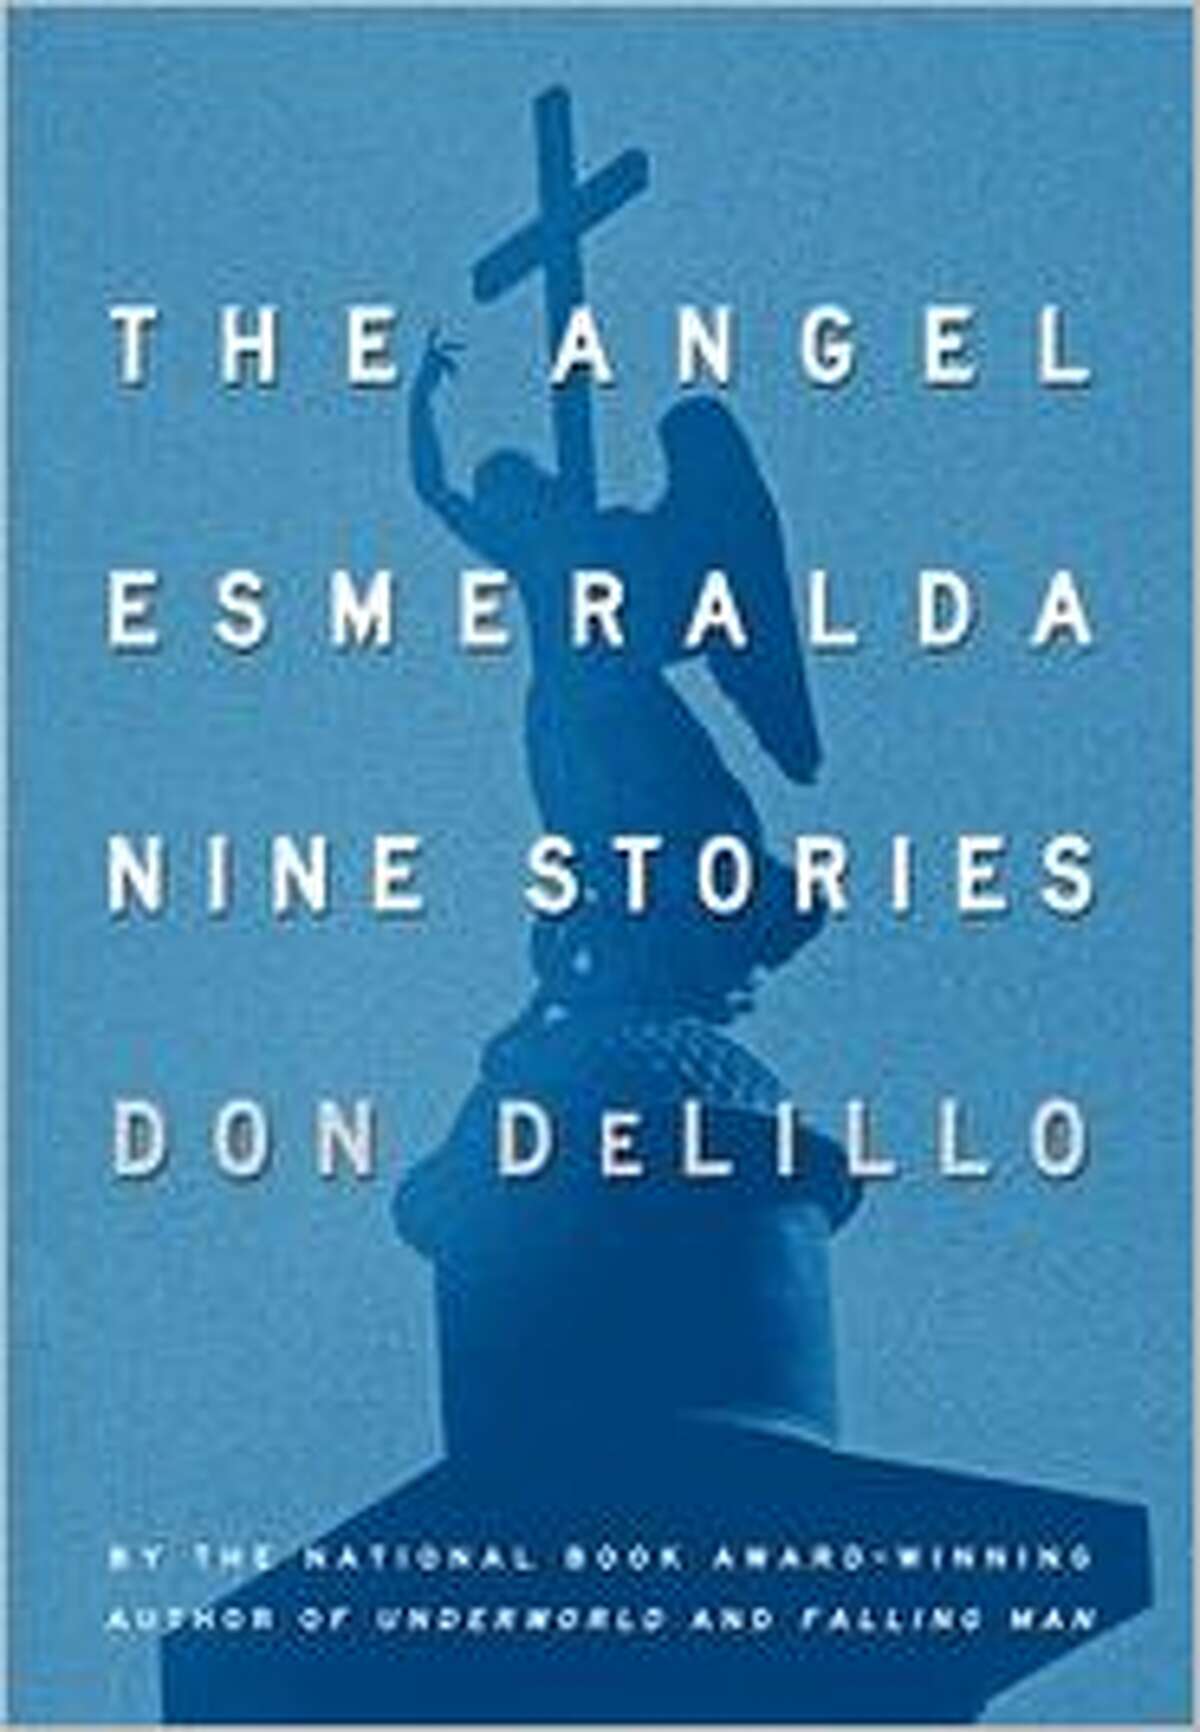 "The Angel Esmeralda: Nine Stories," by Don Delillo